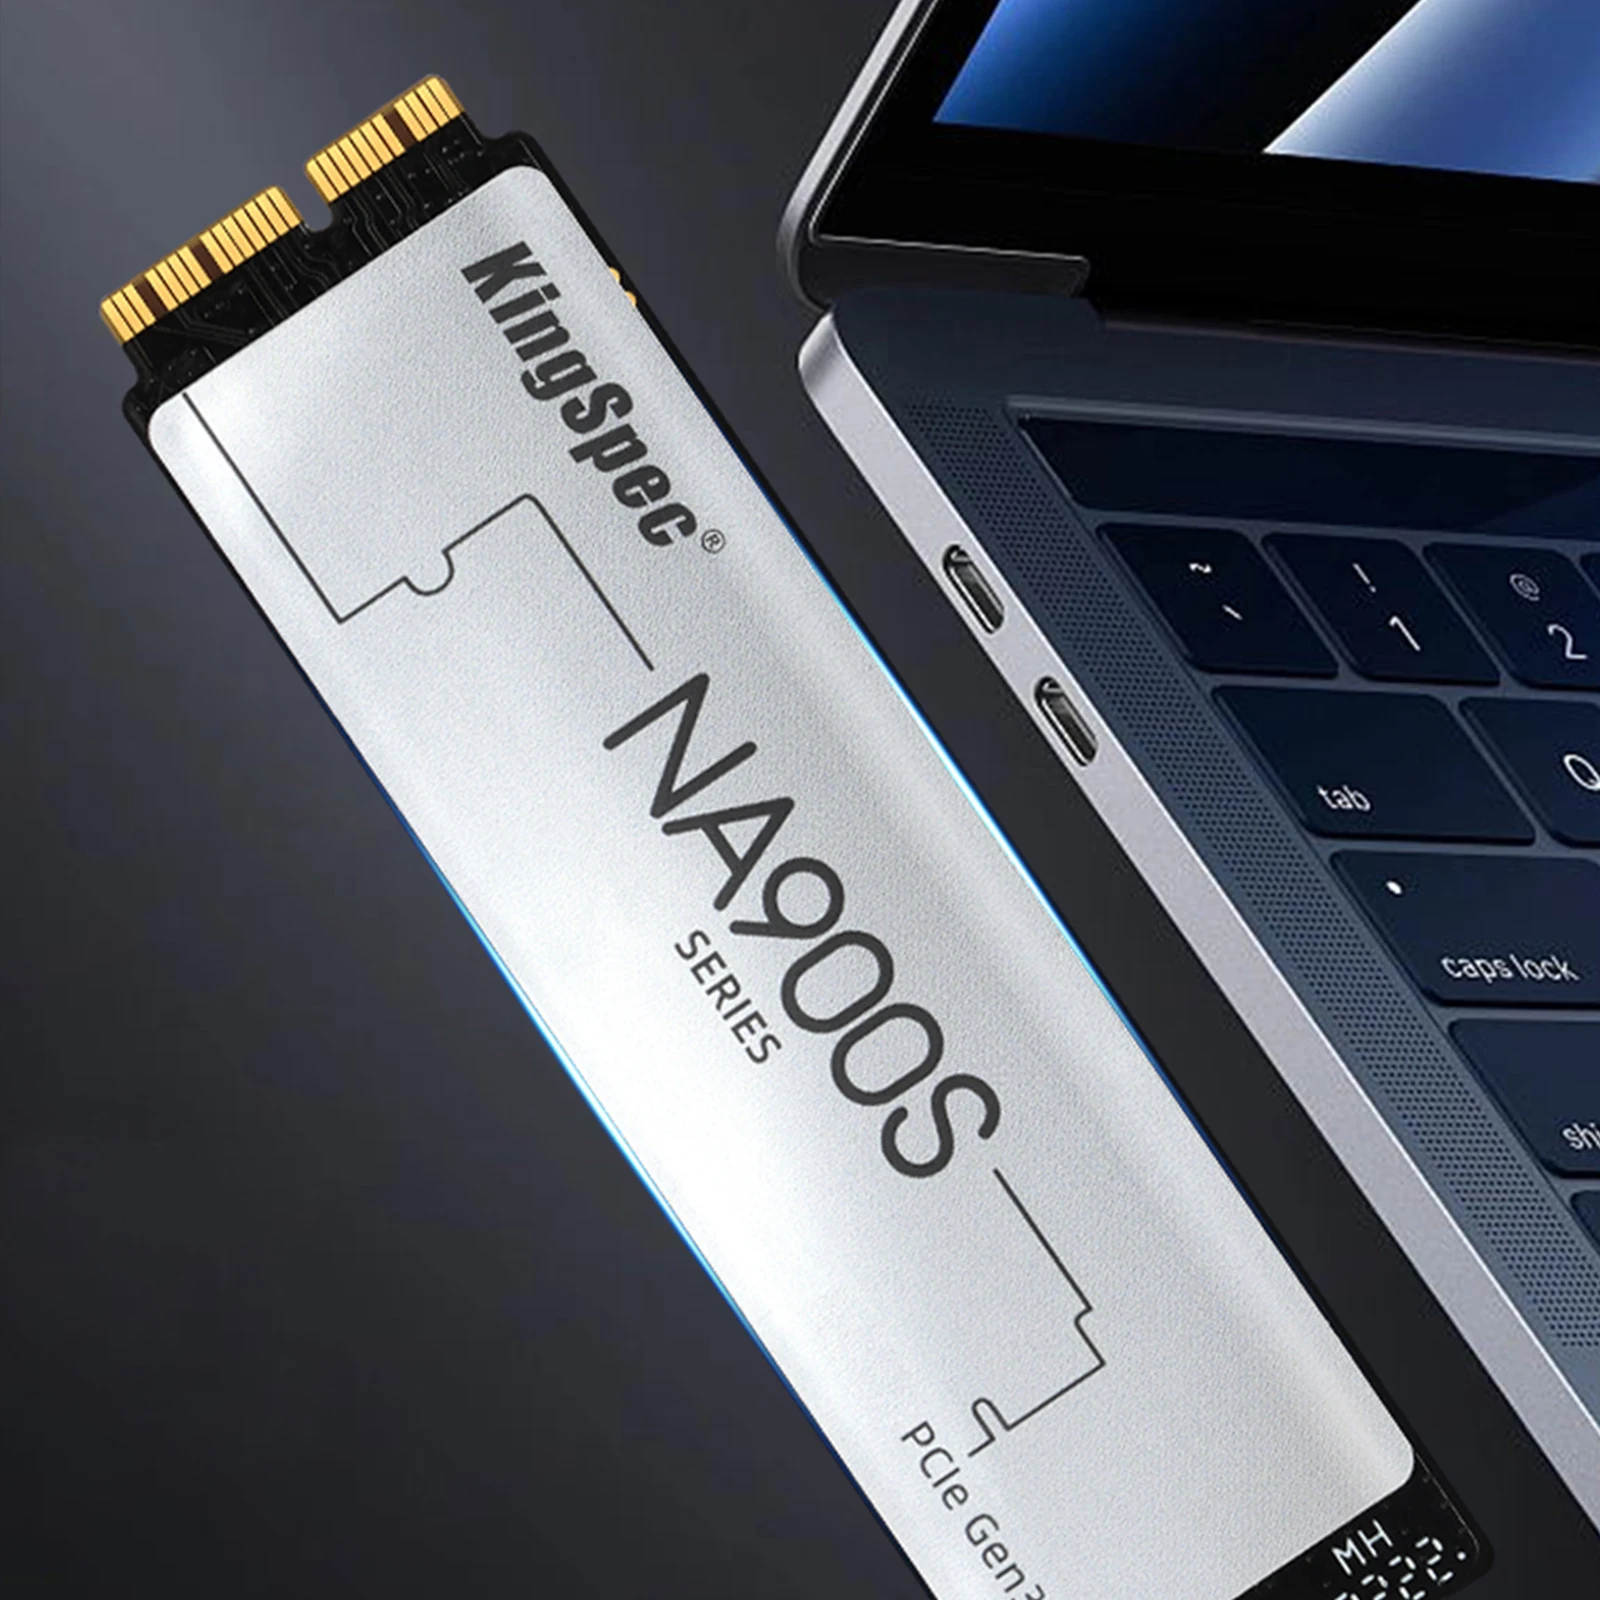 KingSpec SSD M2 NMVe 500G 512G 1TB 2TB M.2 NVME PCIe SSD for Macbook Pro A1502 A1398 Macbook Air A1465 Internal Solid SSD Drive